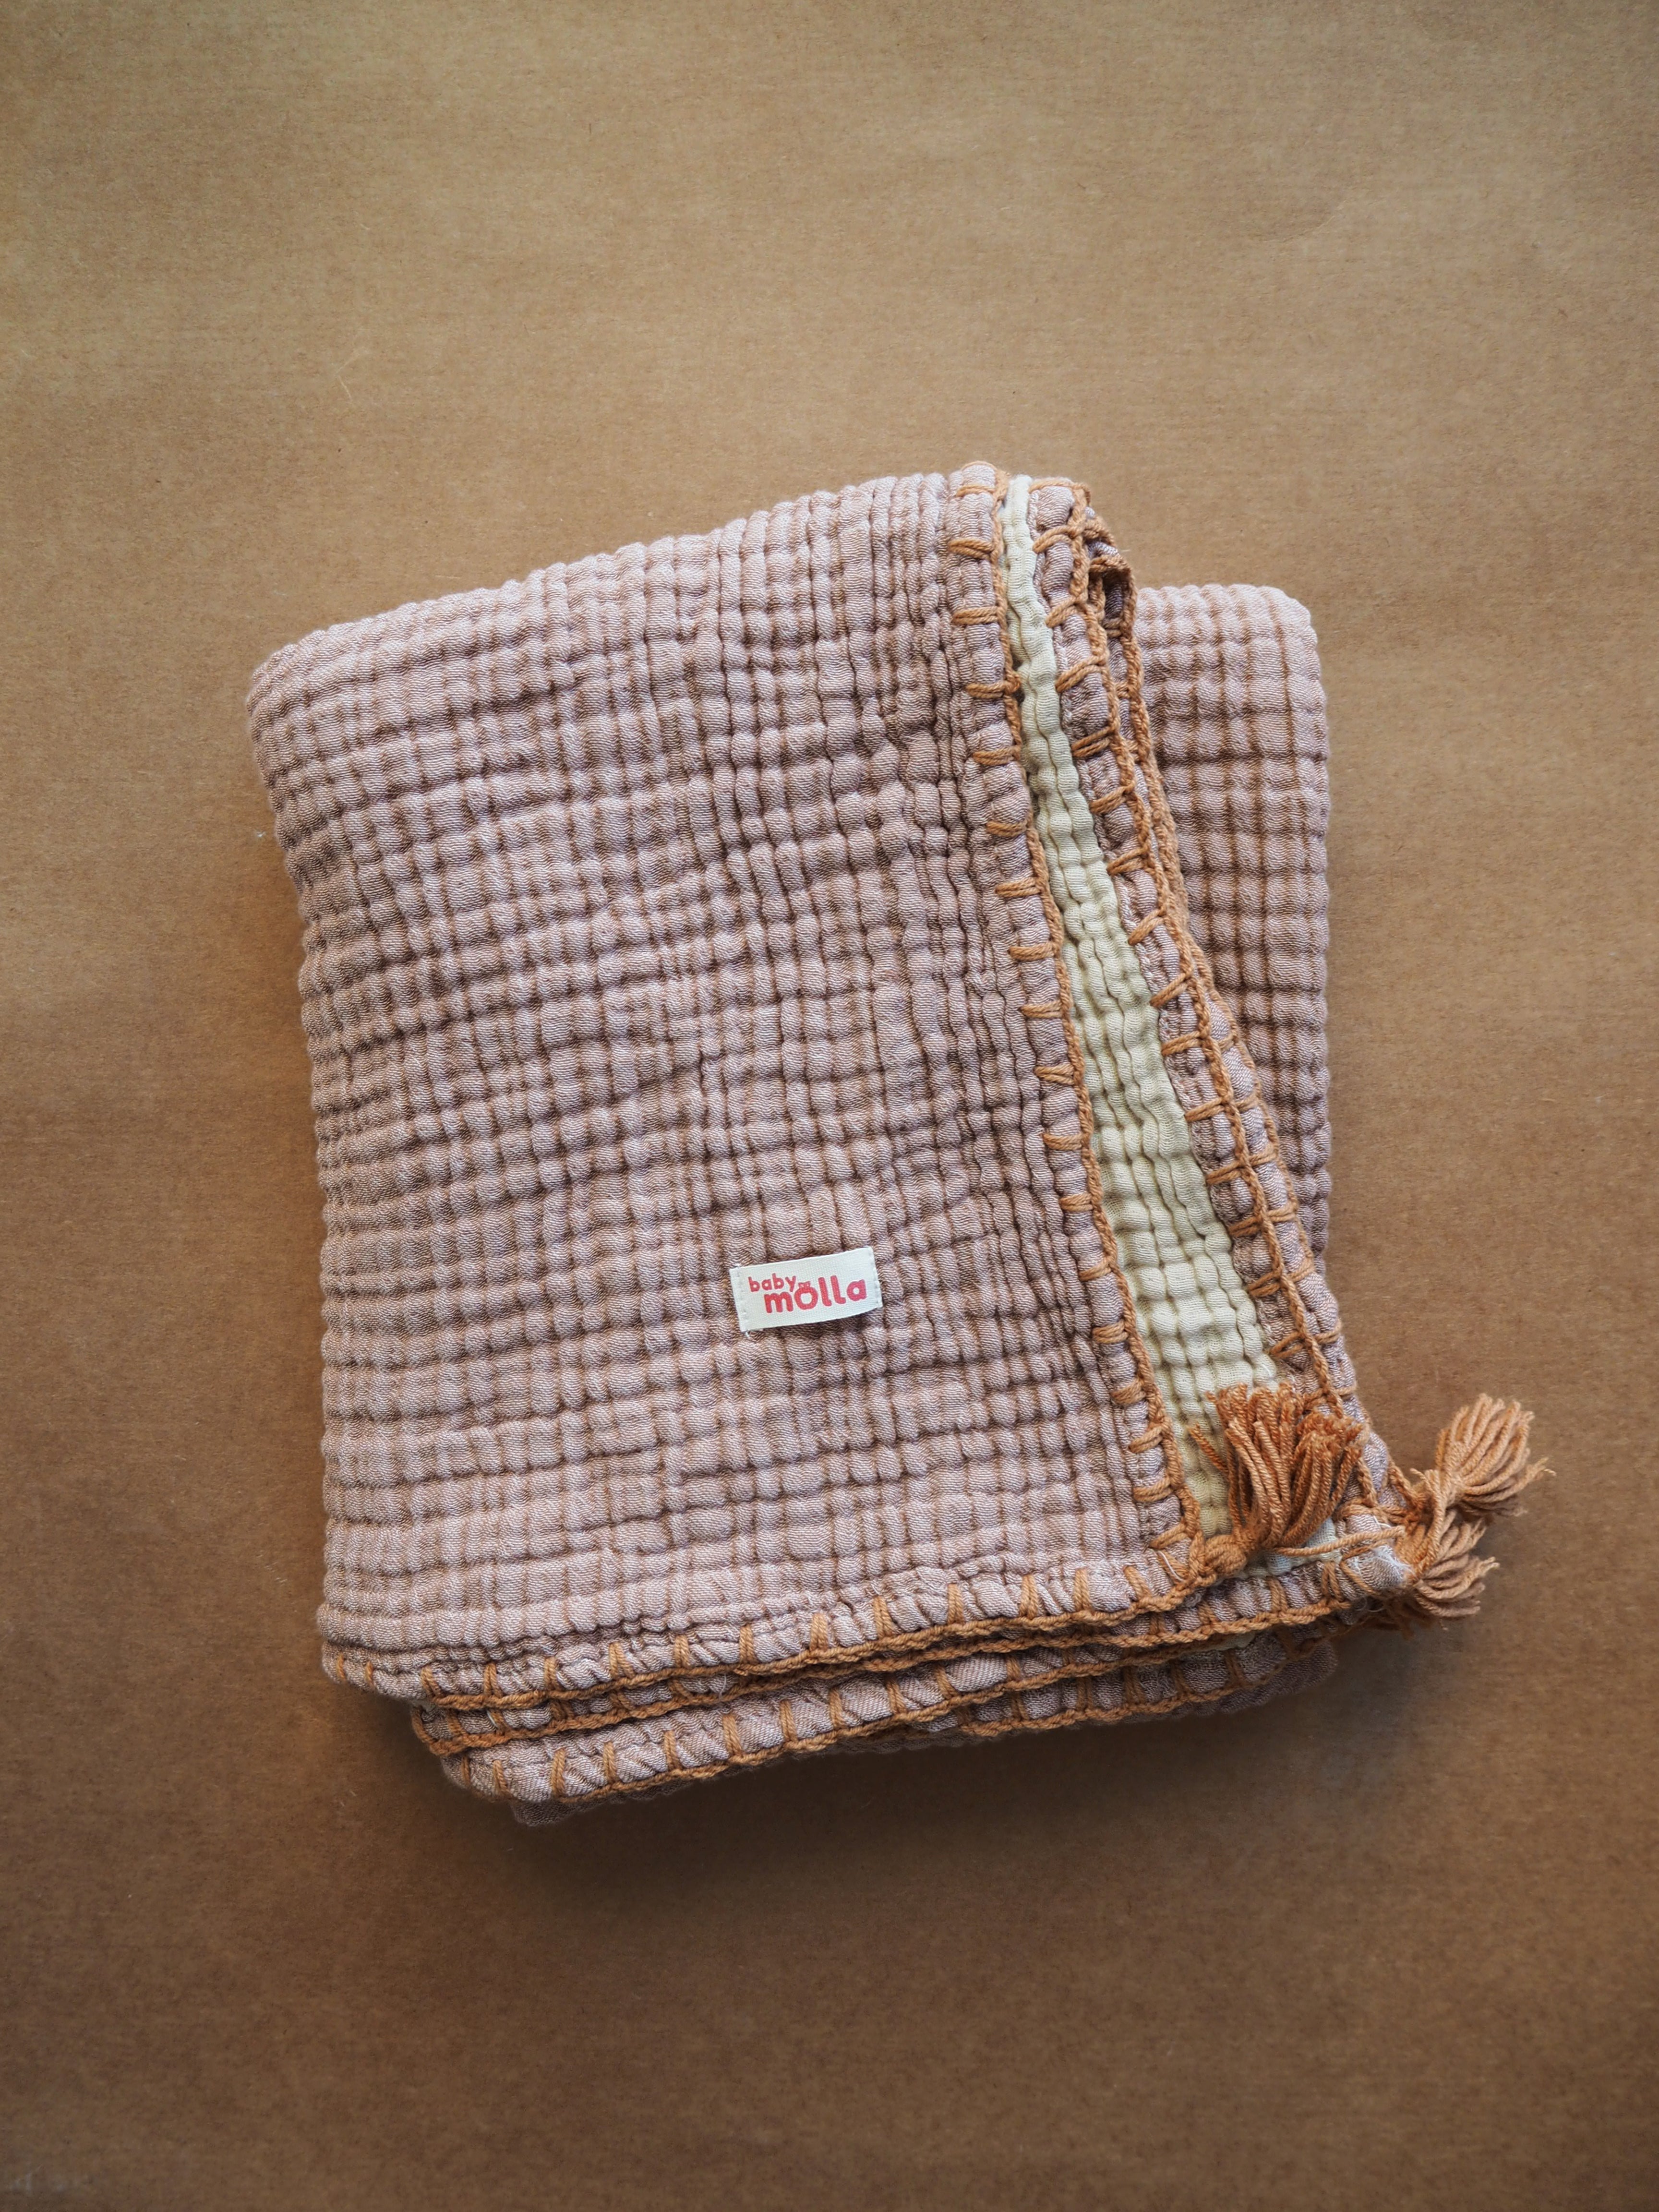 Muslin hand-knitted blanket 2in1 - Brown